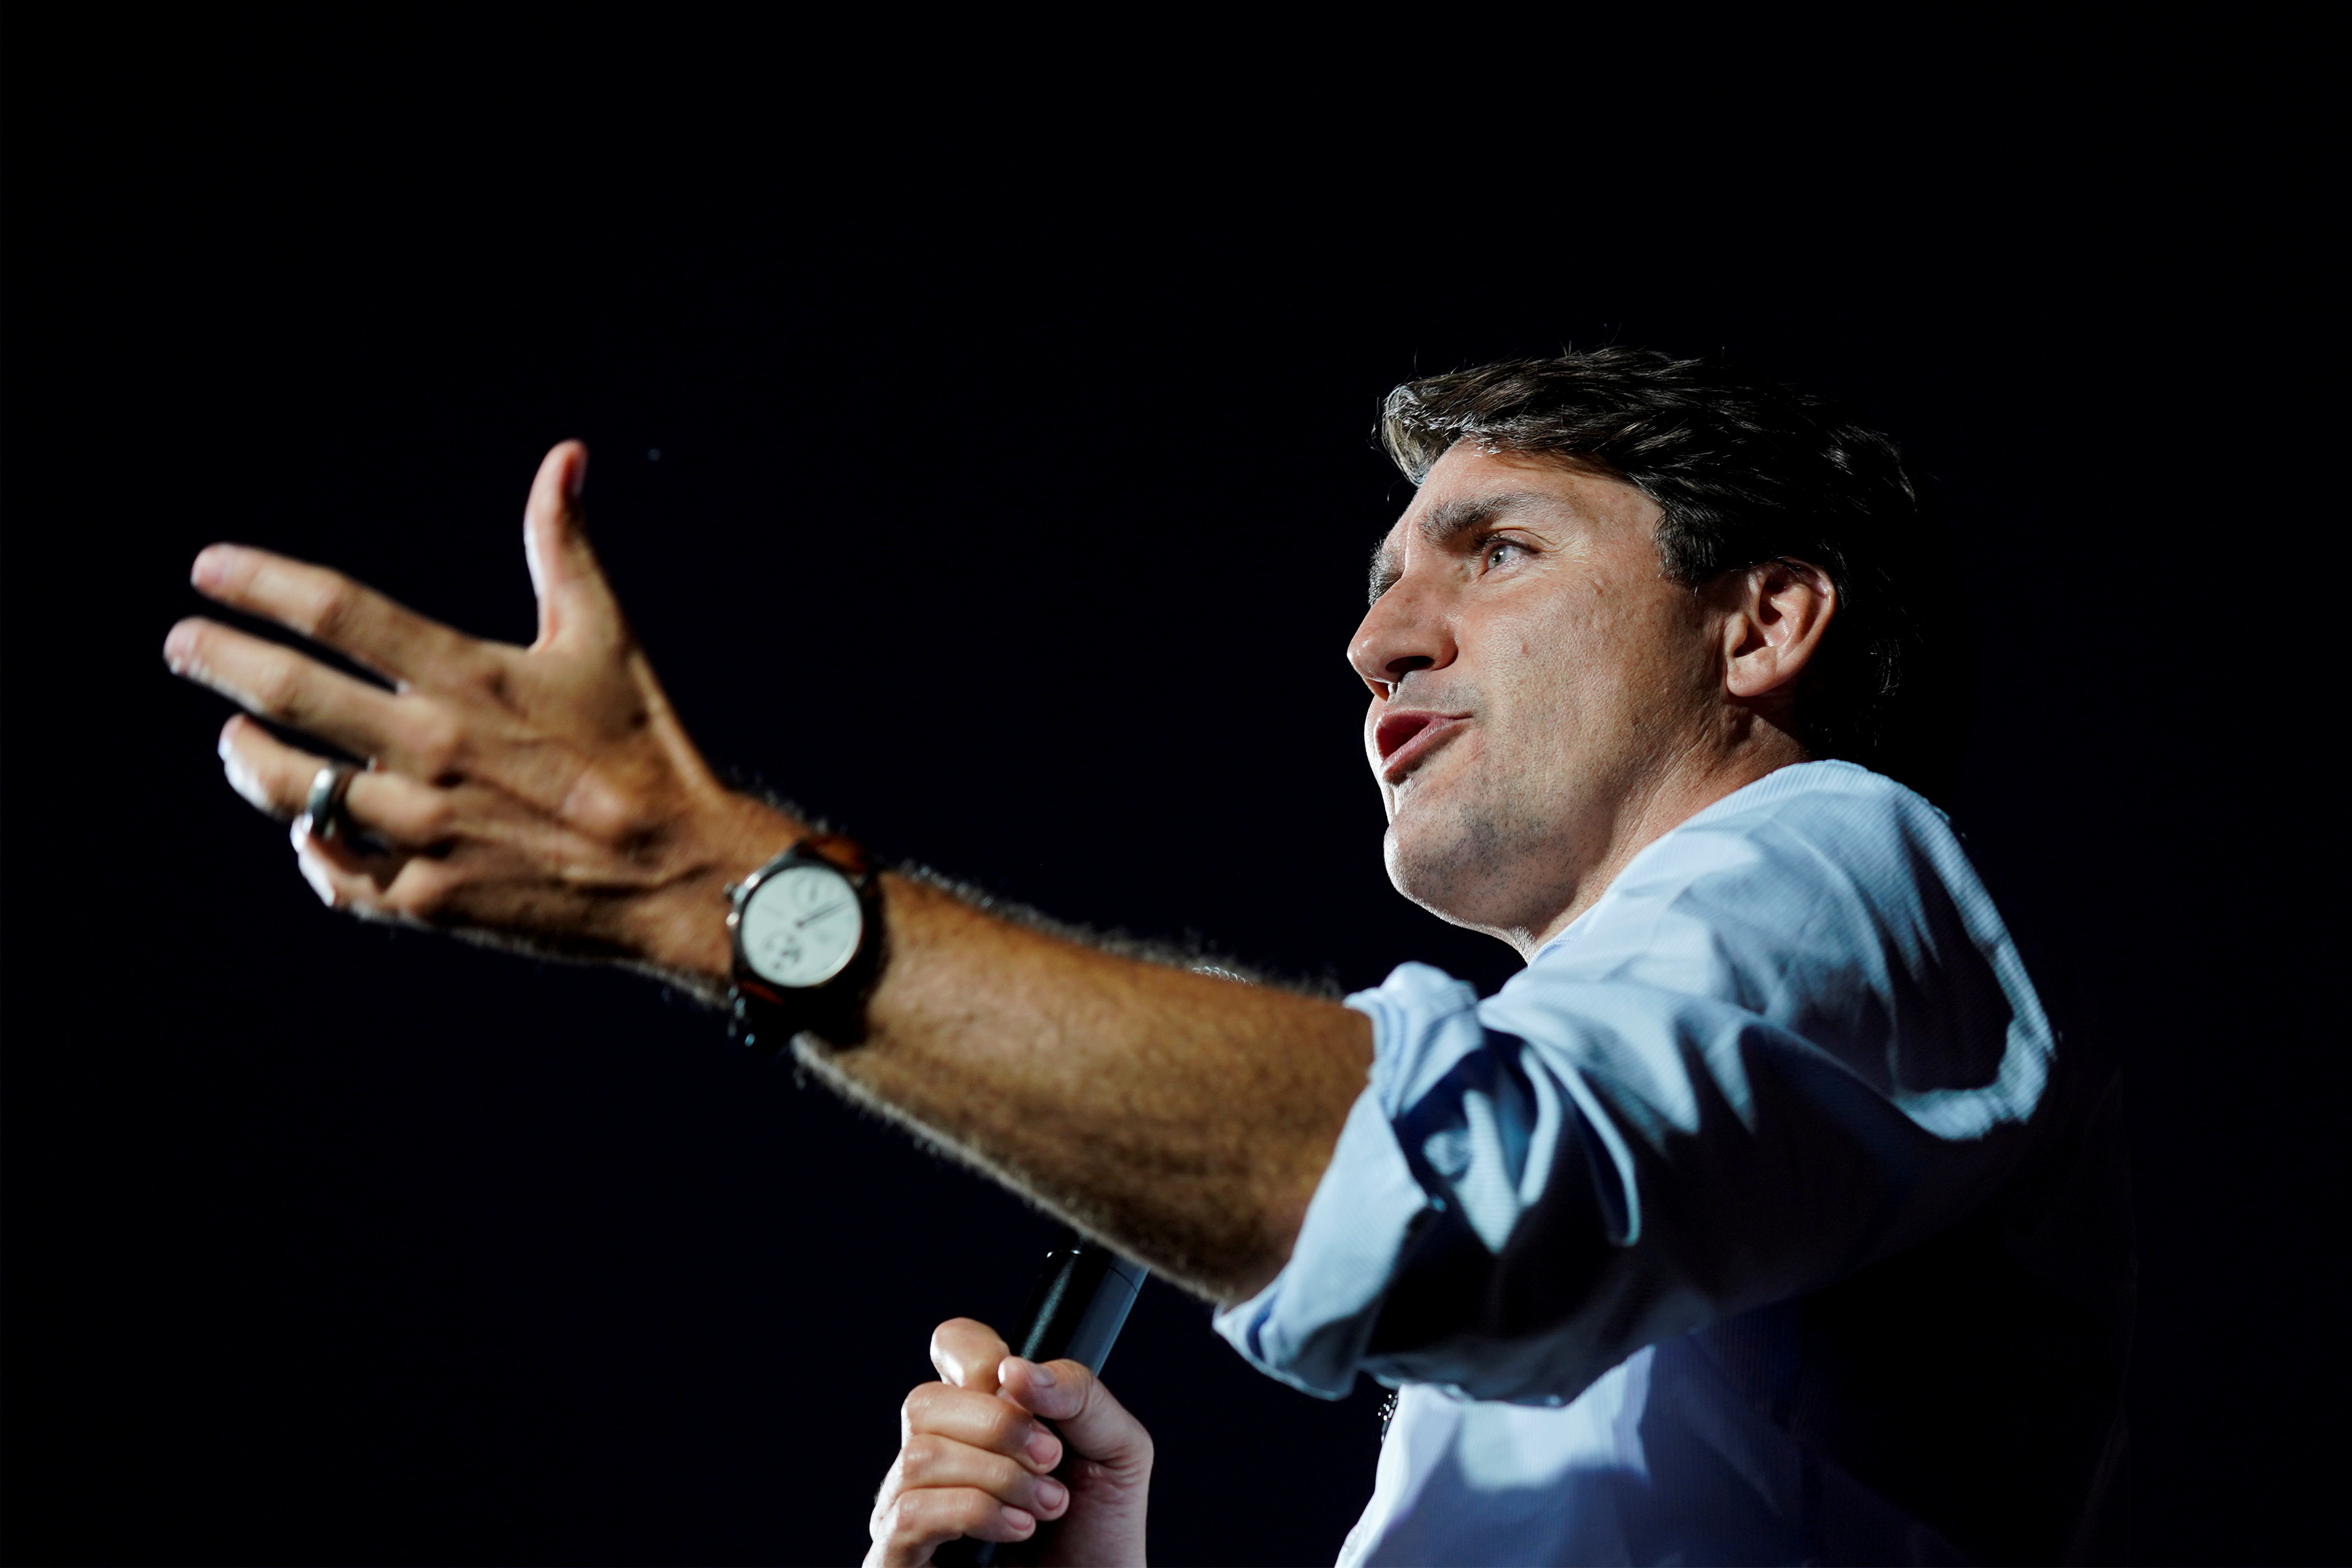 Canada's Prime Minister Justin Trudeau campaigns in Peterborough, Ontario